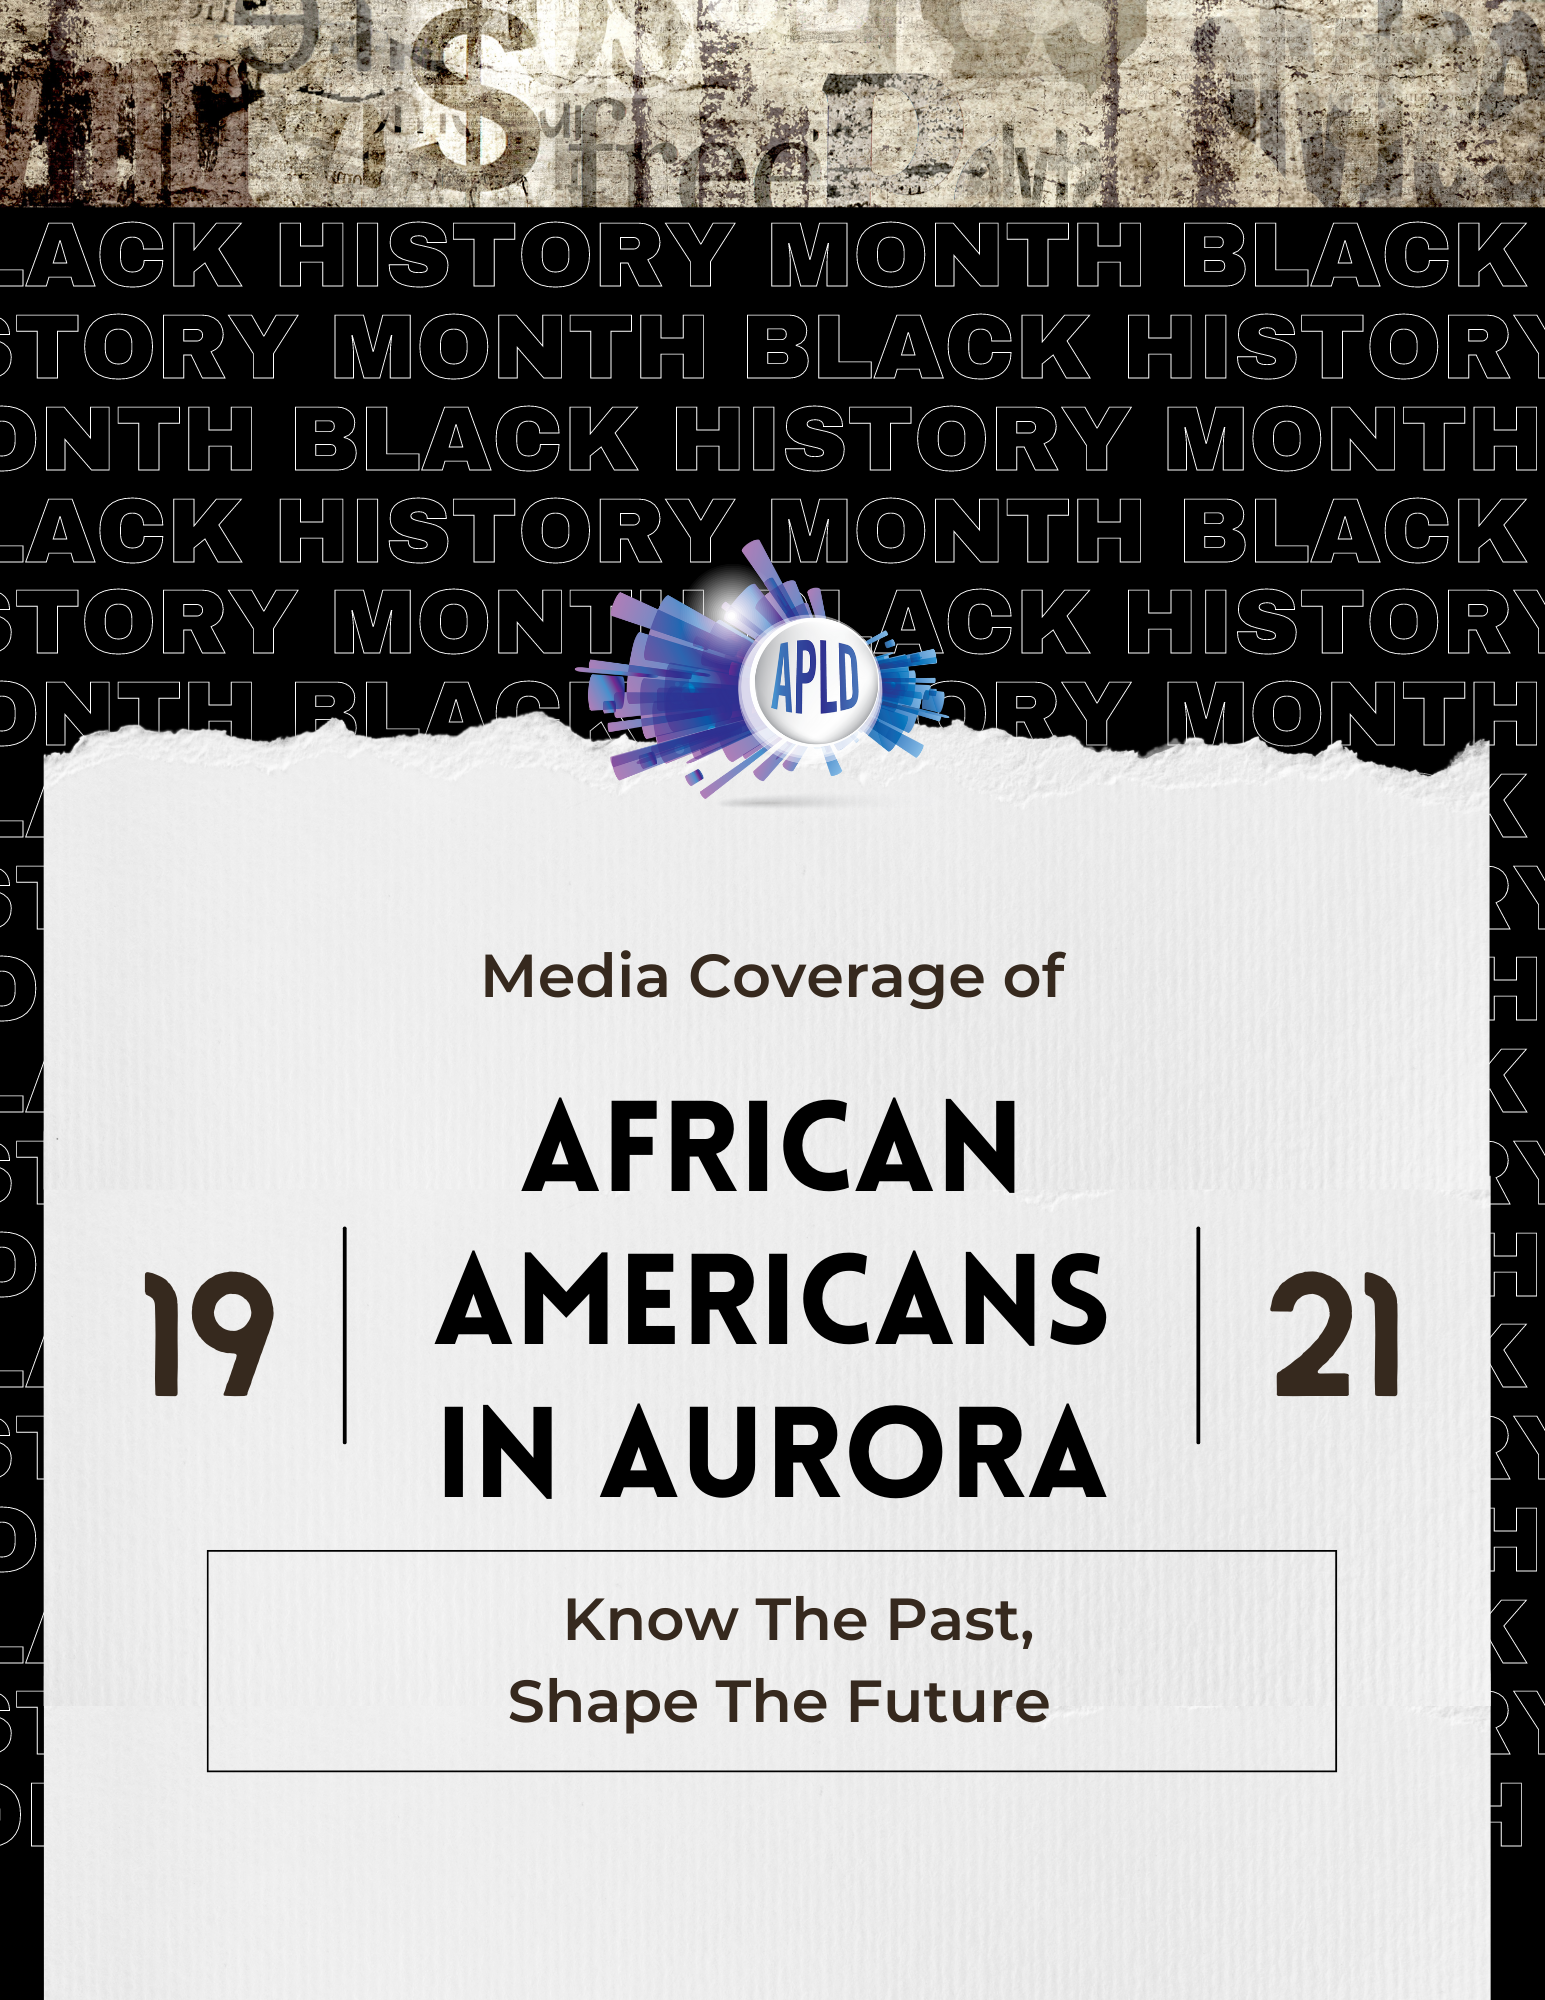 African Americans in Aurora